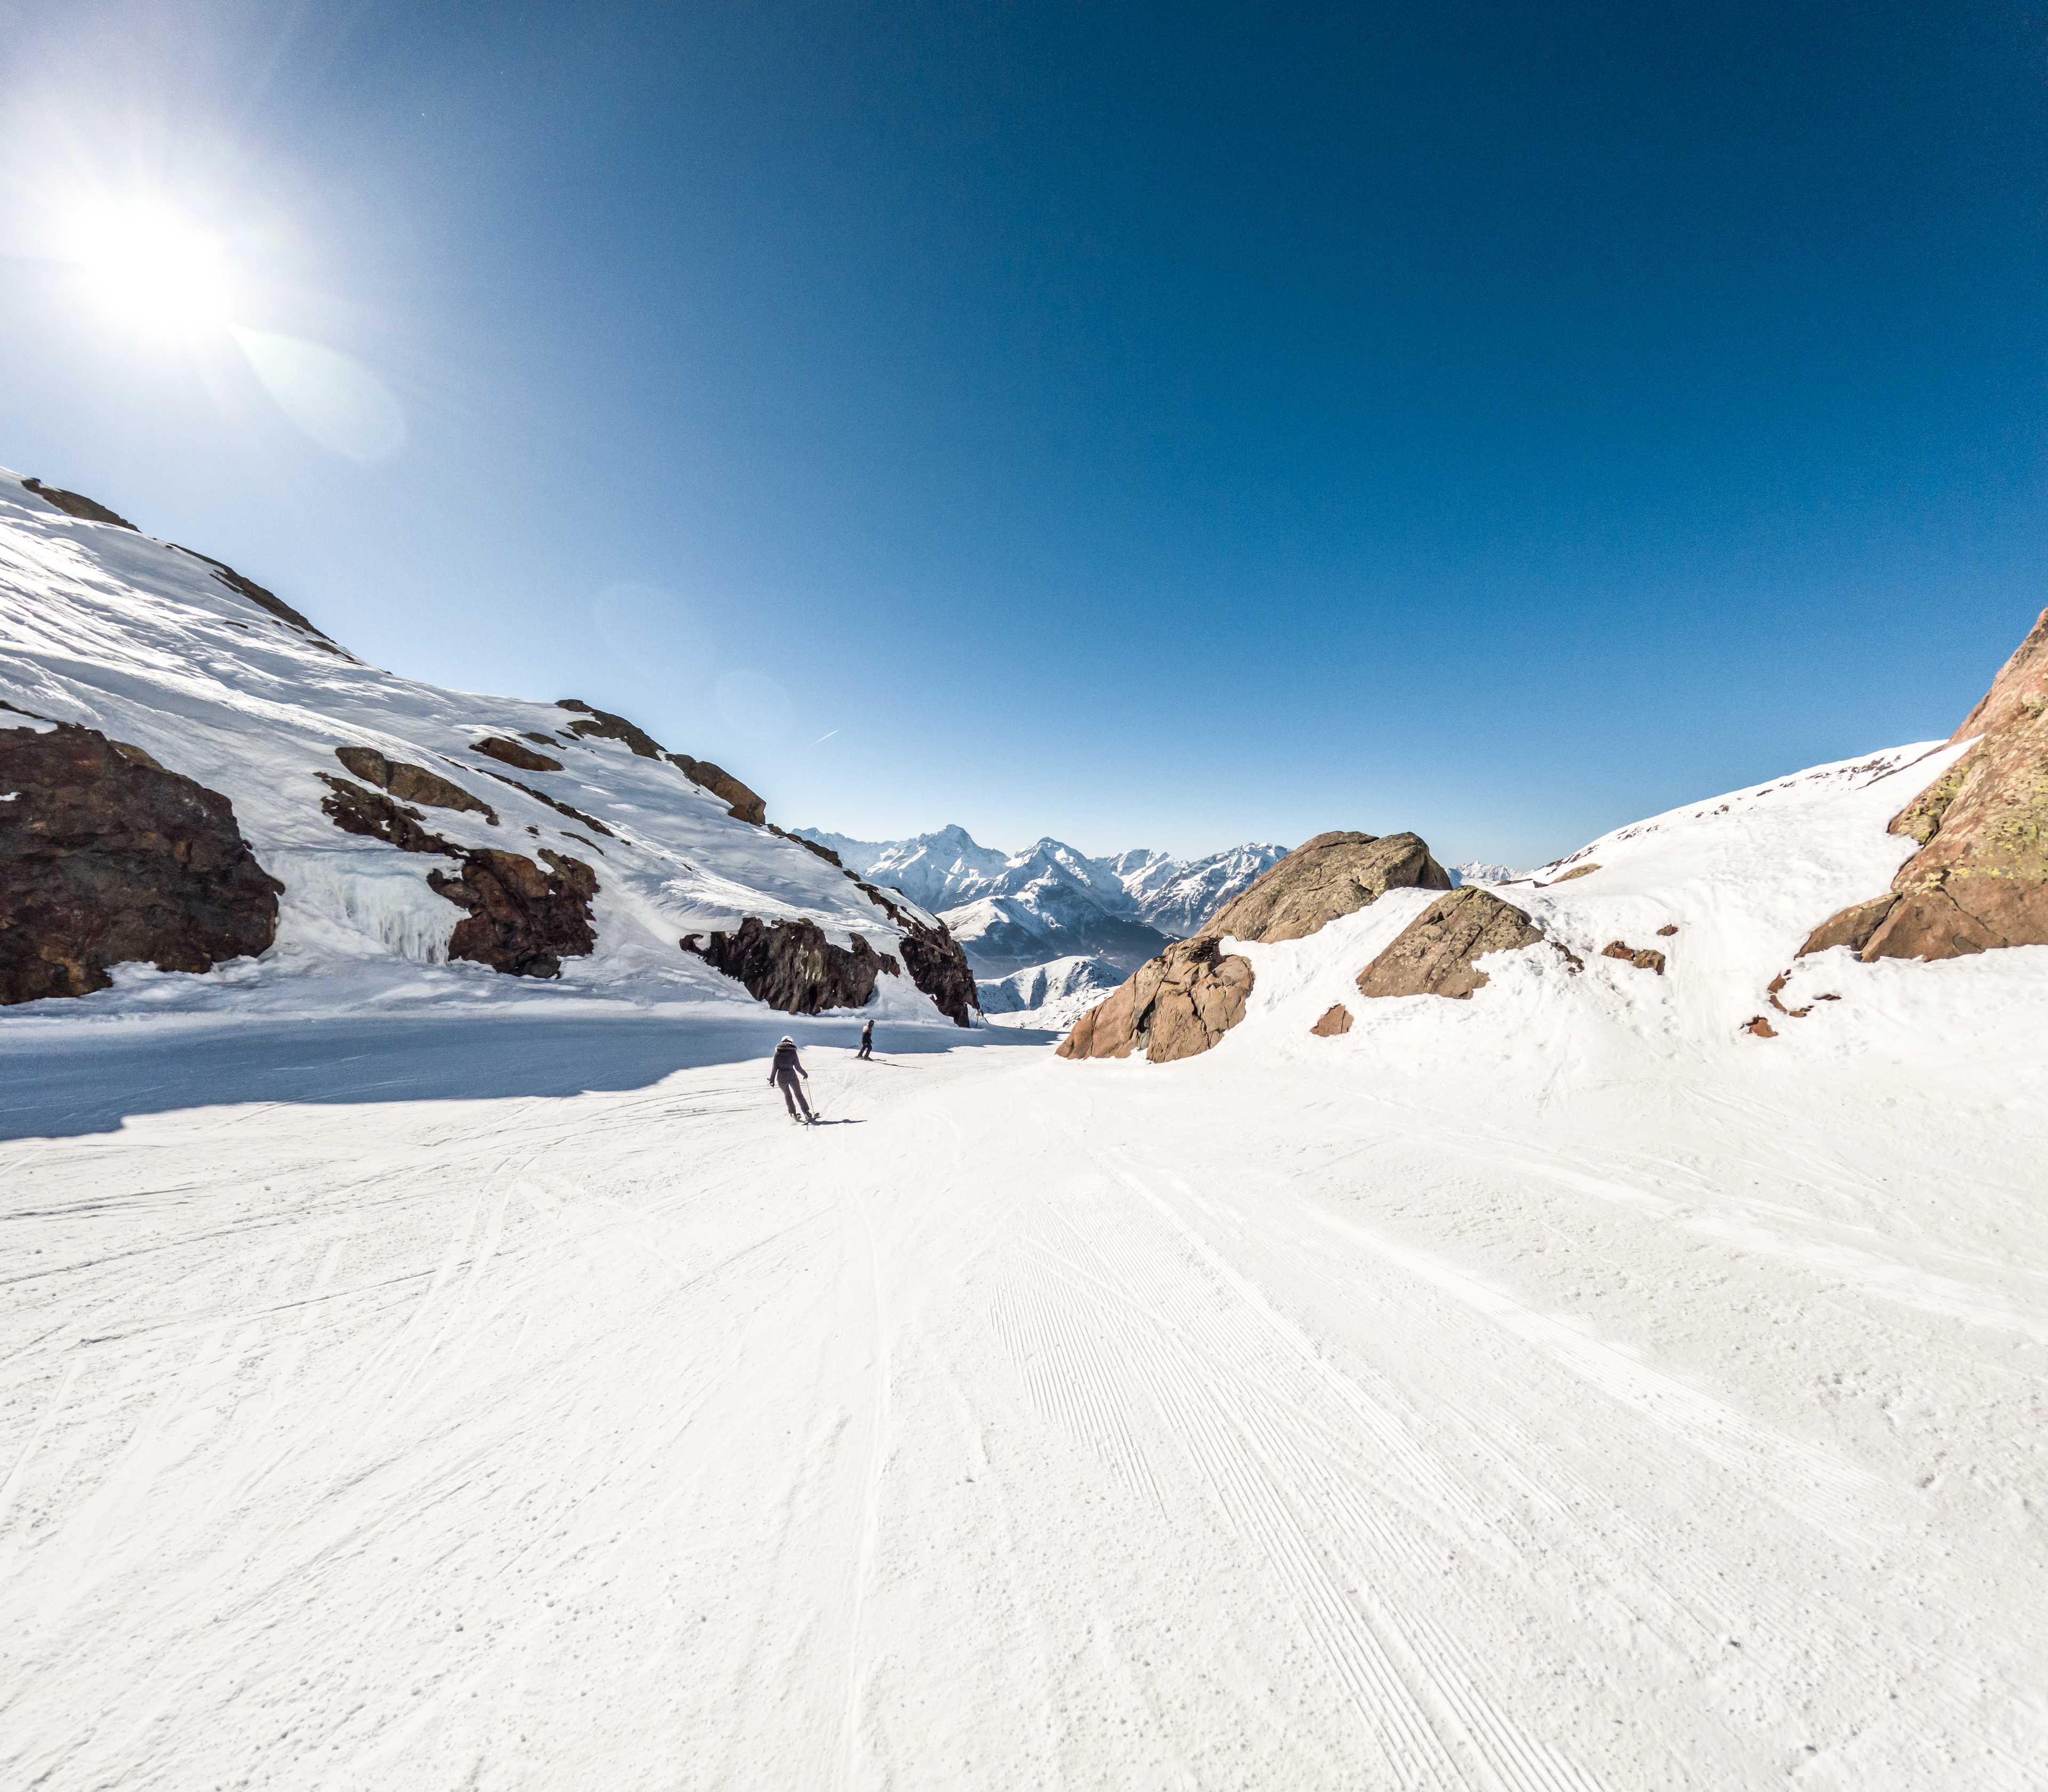 Europe's longest black slope: Sarenne, Alpe d'Huez